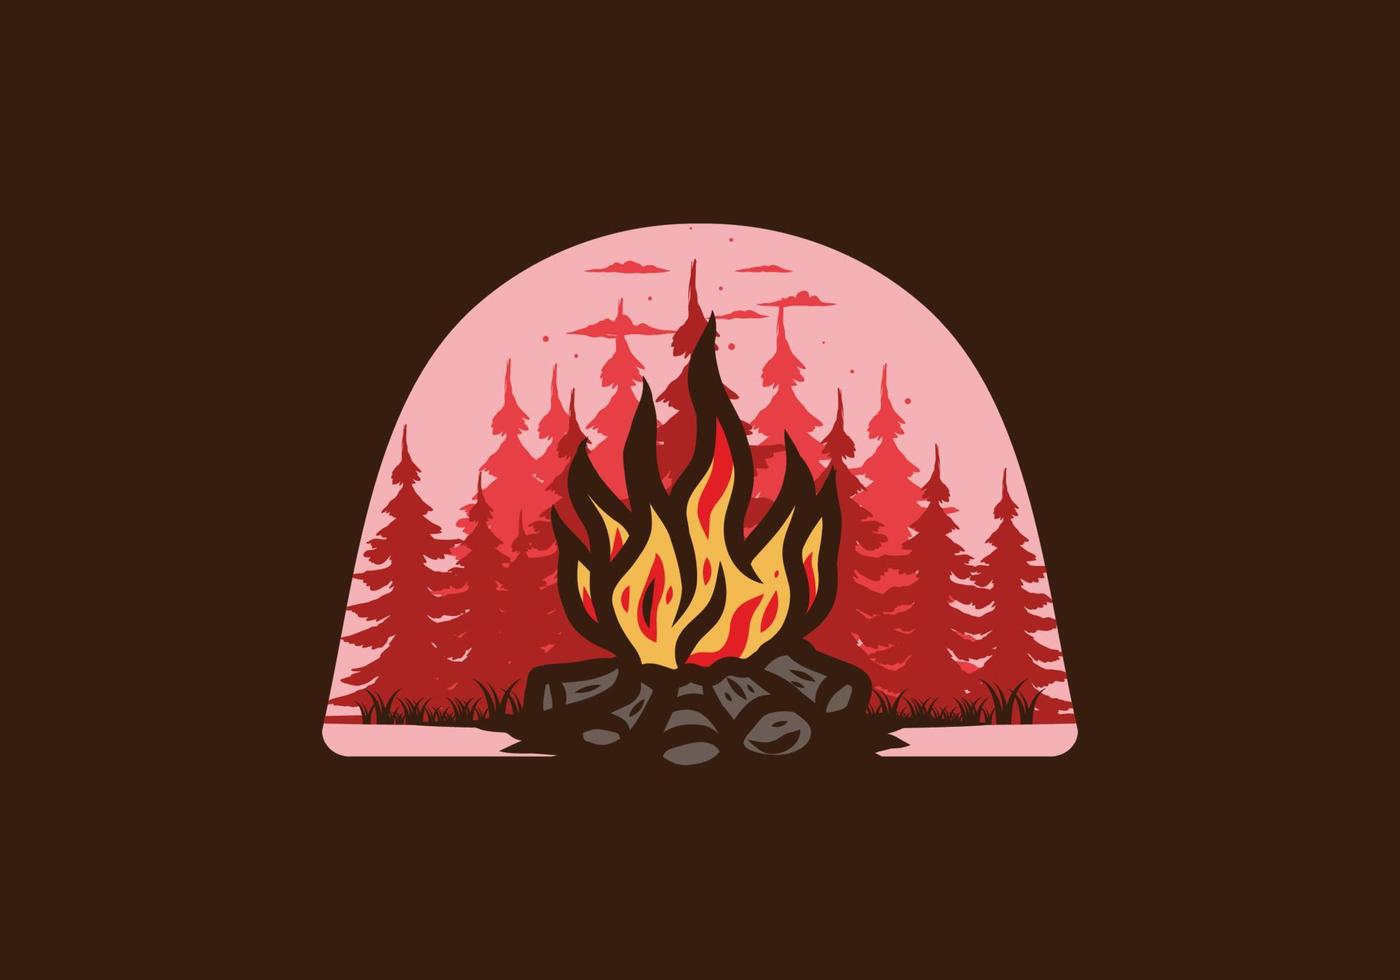 Bonfire in the jungle badge illustration vector